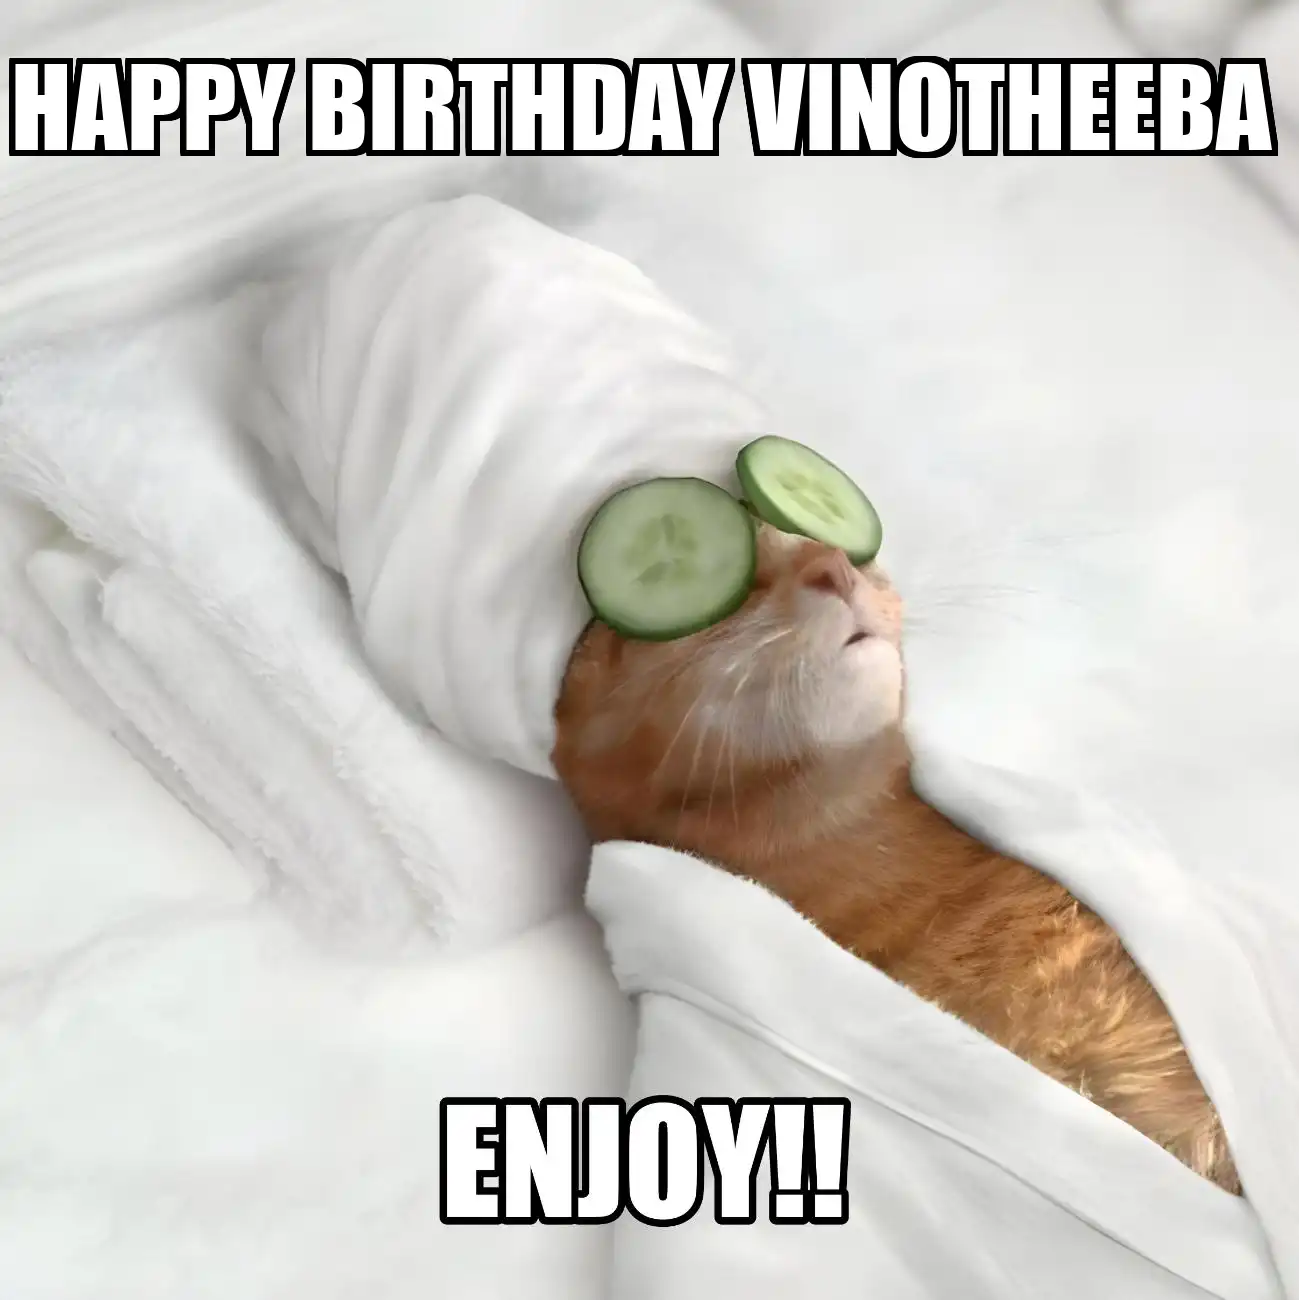 Happy Birthday Vinotheeba Enjoy Cat Meme